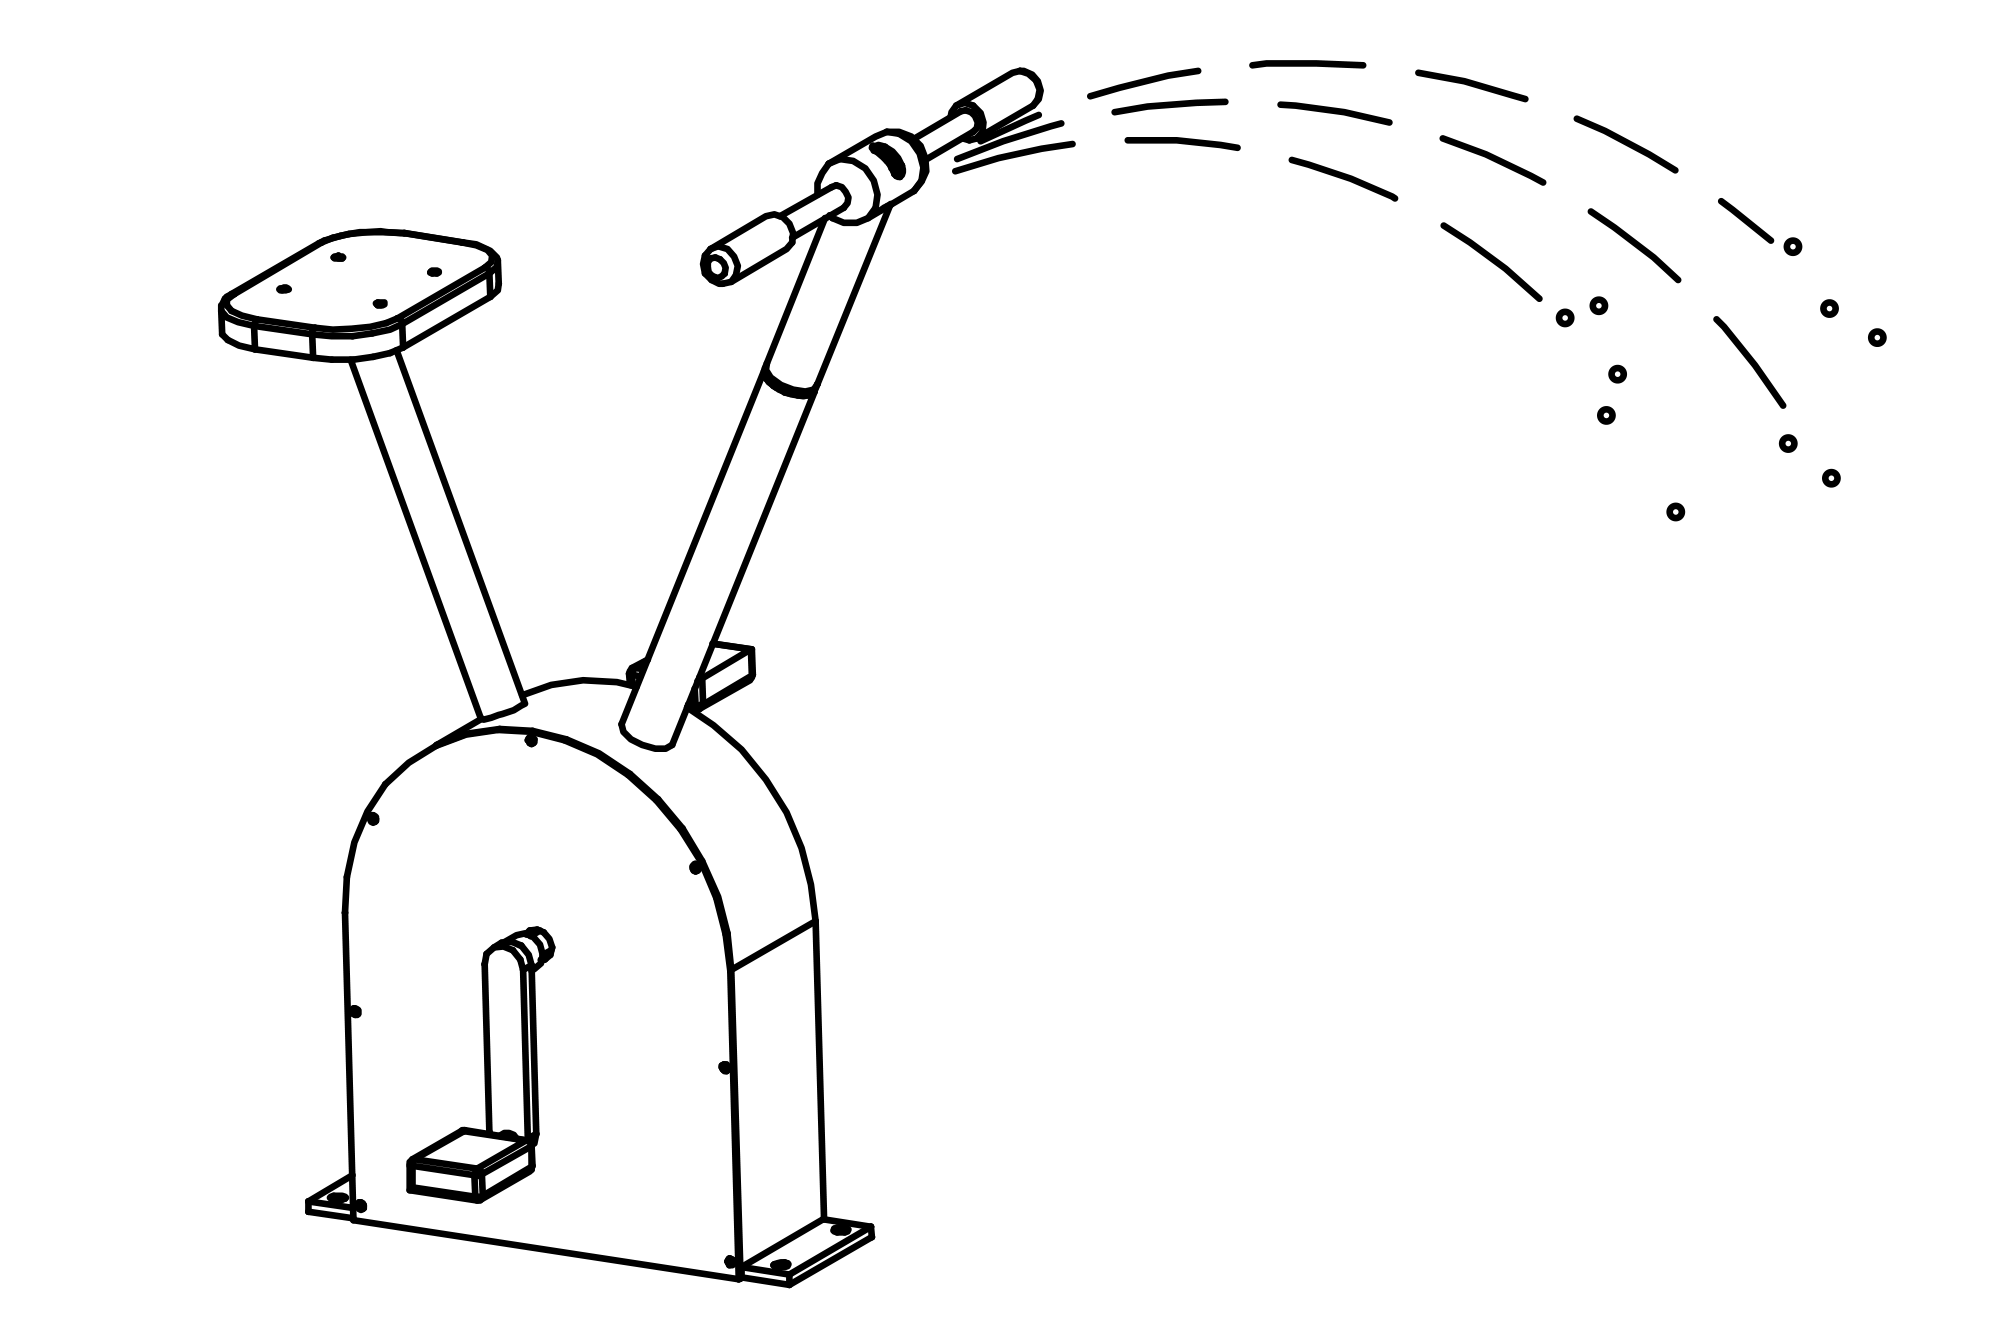 Pedal Pump with spray head in handlebar